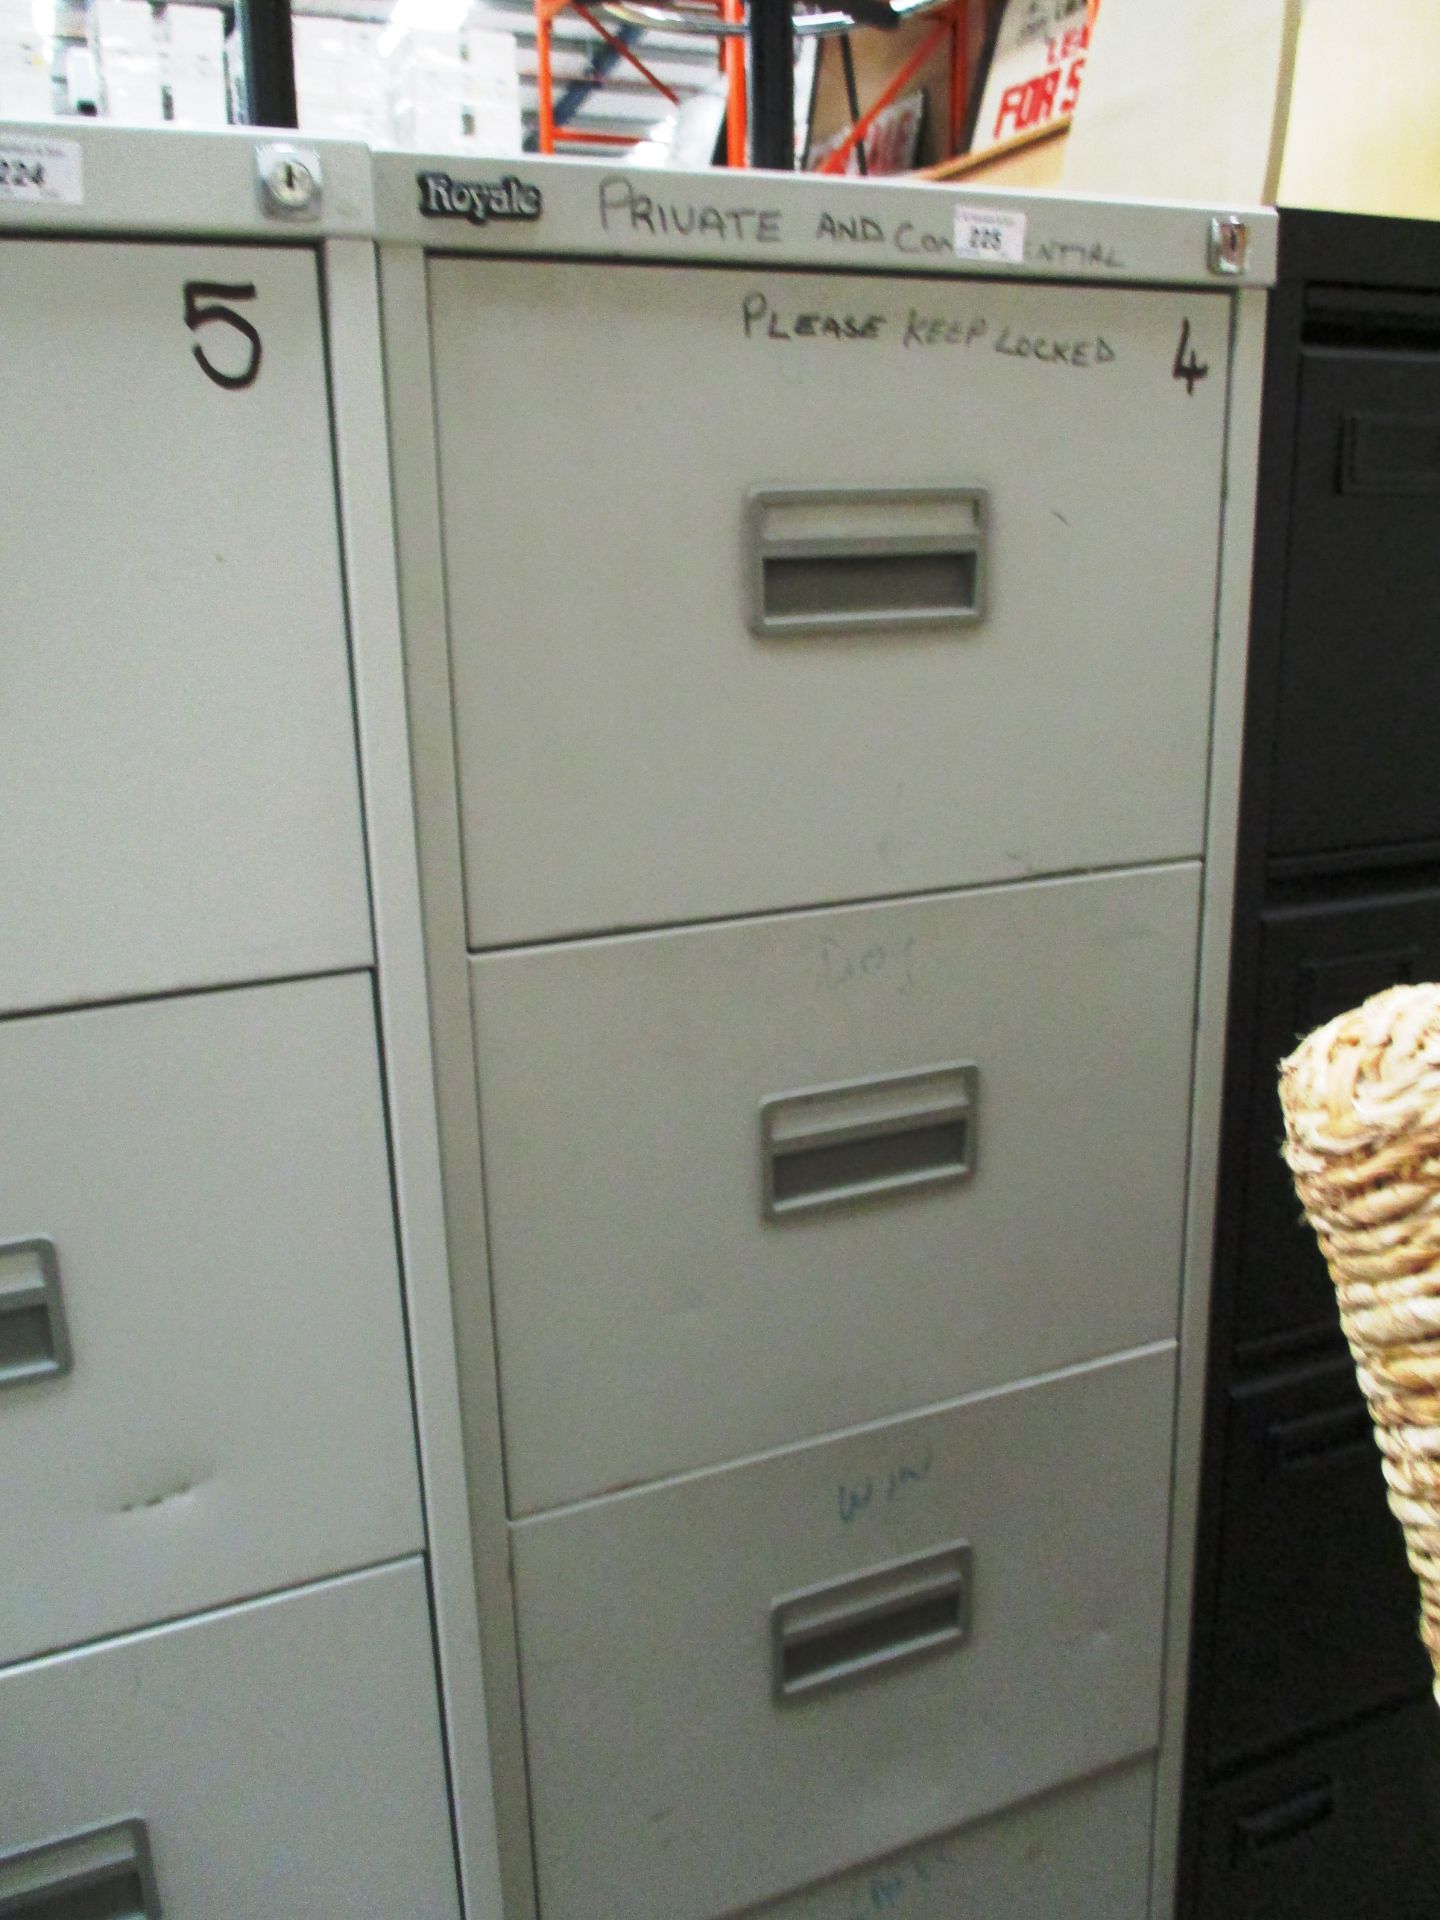 A Royal grey metal four drawer filing cabinet (unlocked no keys)